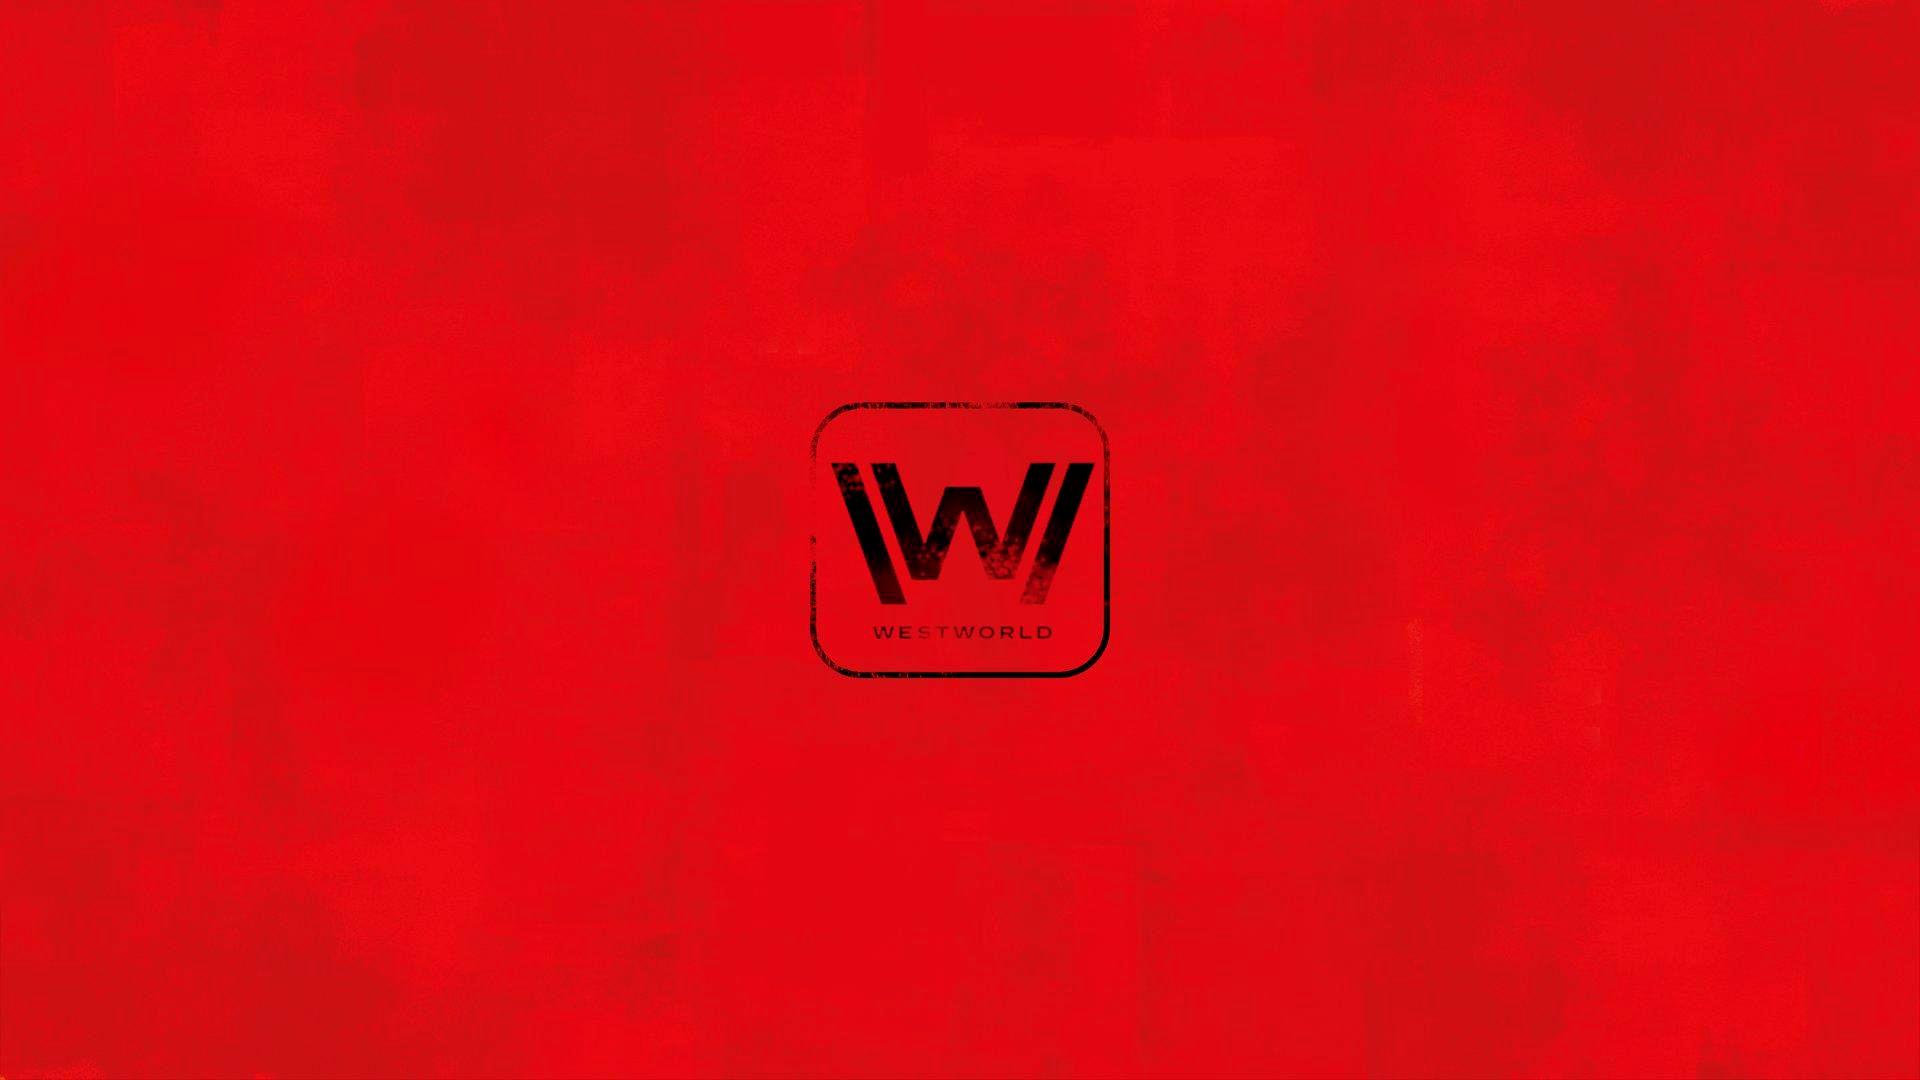 Westworld 4k Wallpaper. wallgem. Free Download 4k